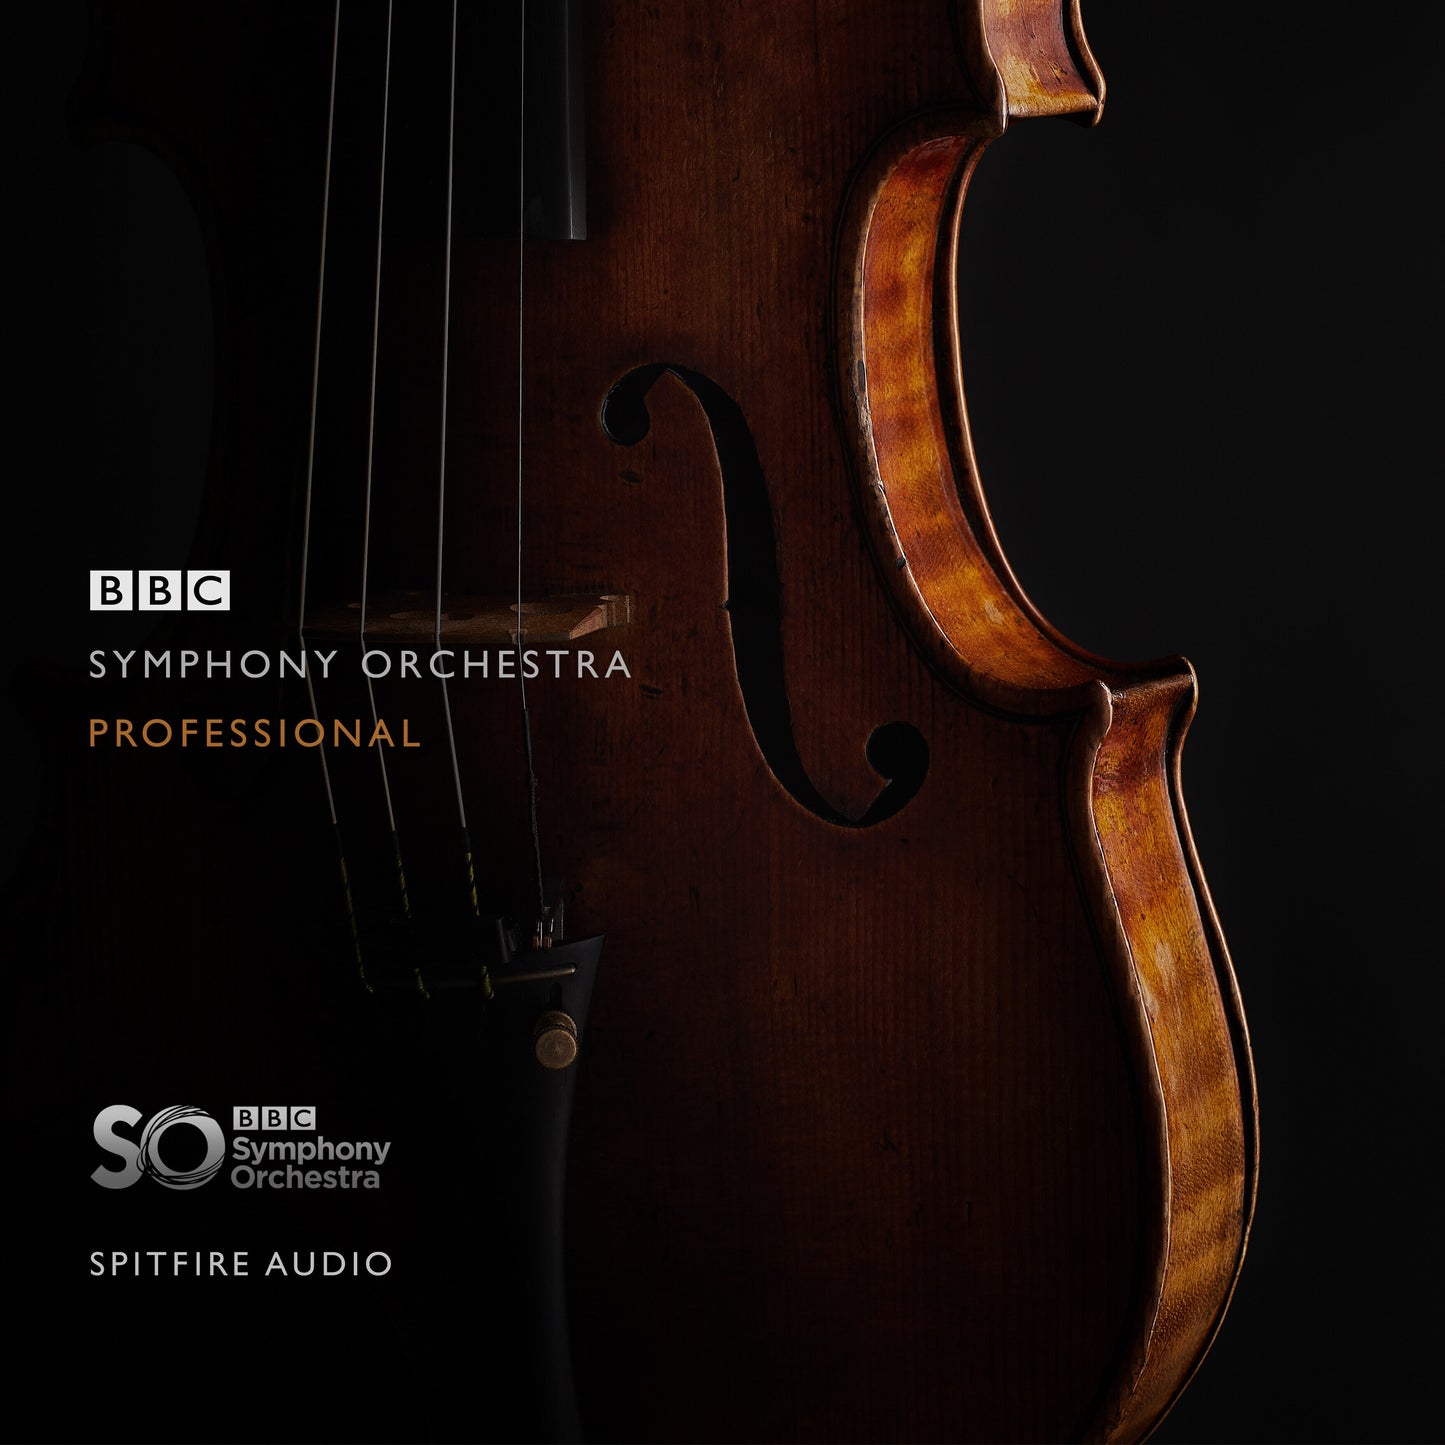 BBC Symphony Orchestra Professional